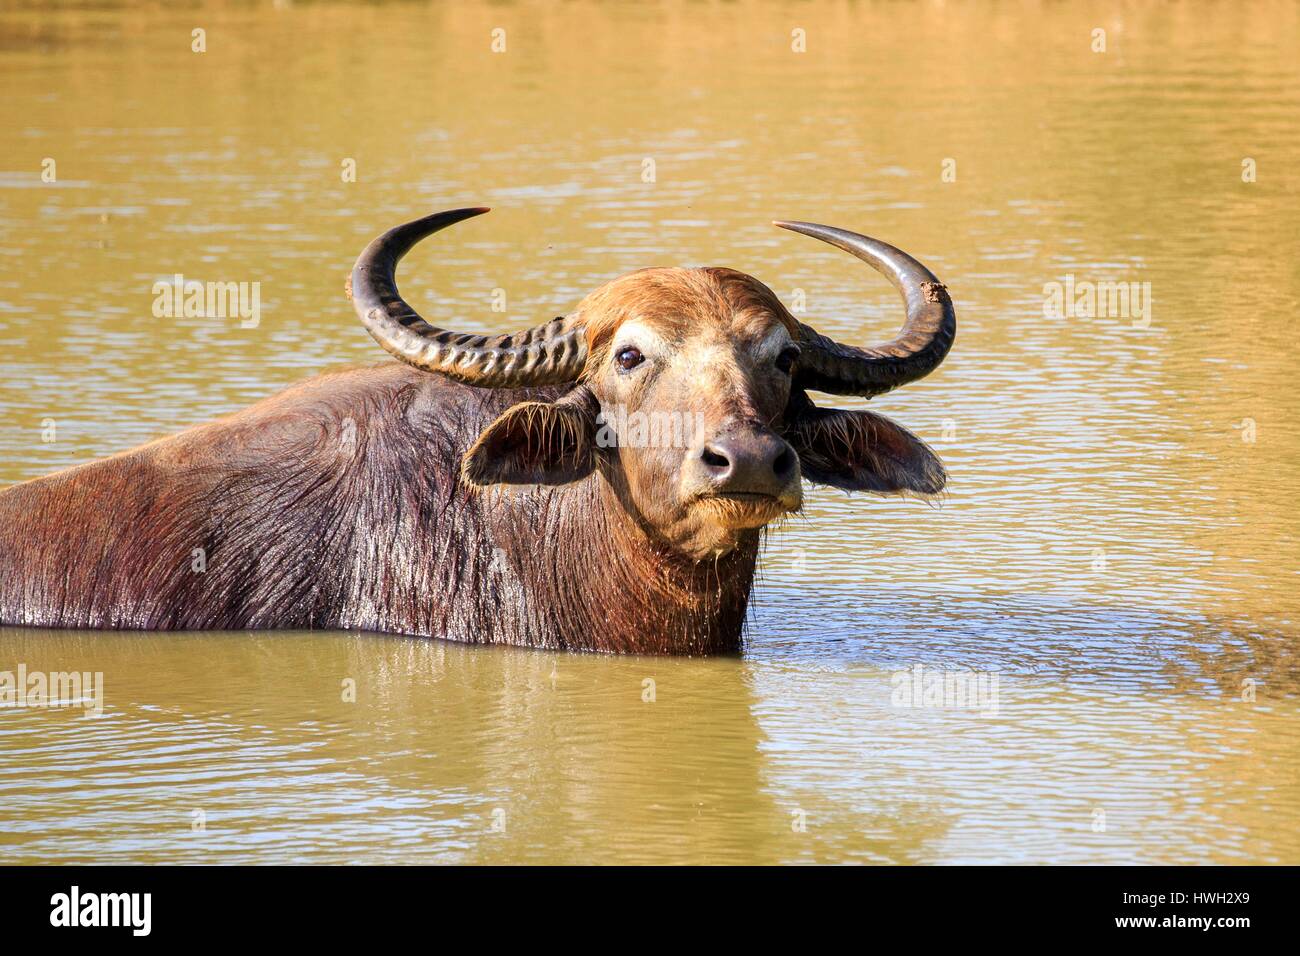 Sri Lanka, Yala national patk, Wild water buffalo or Asian buffalo (Bubalus arnee), resting in the water Stock Photo